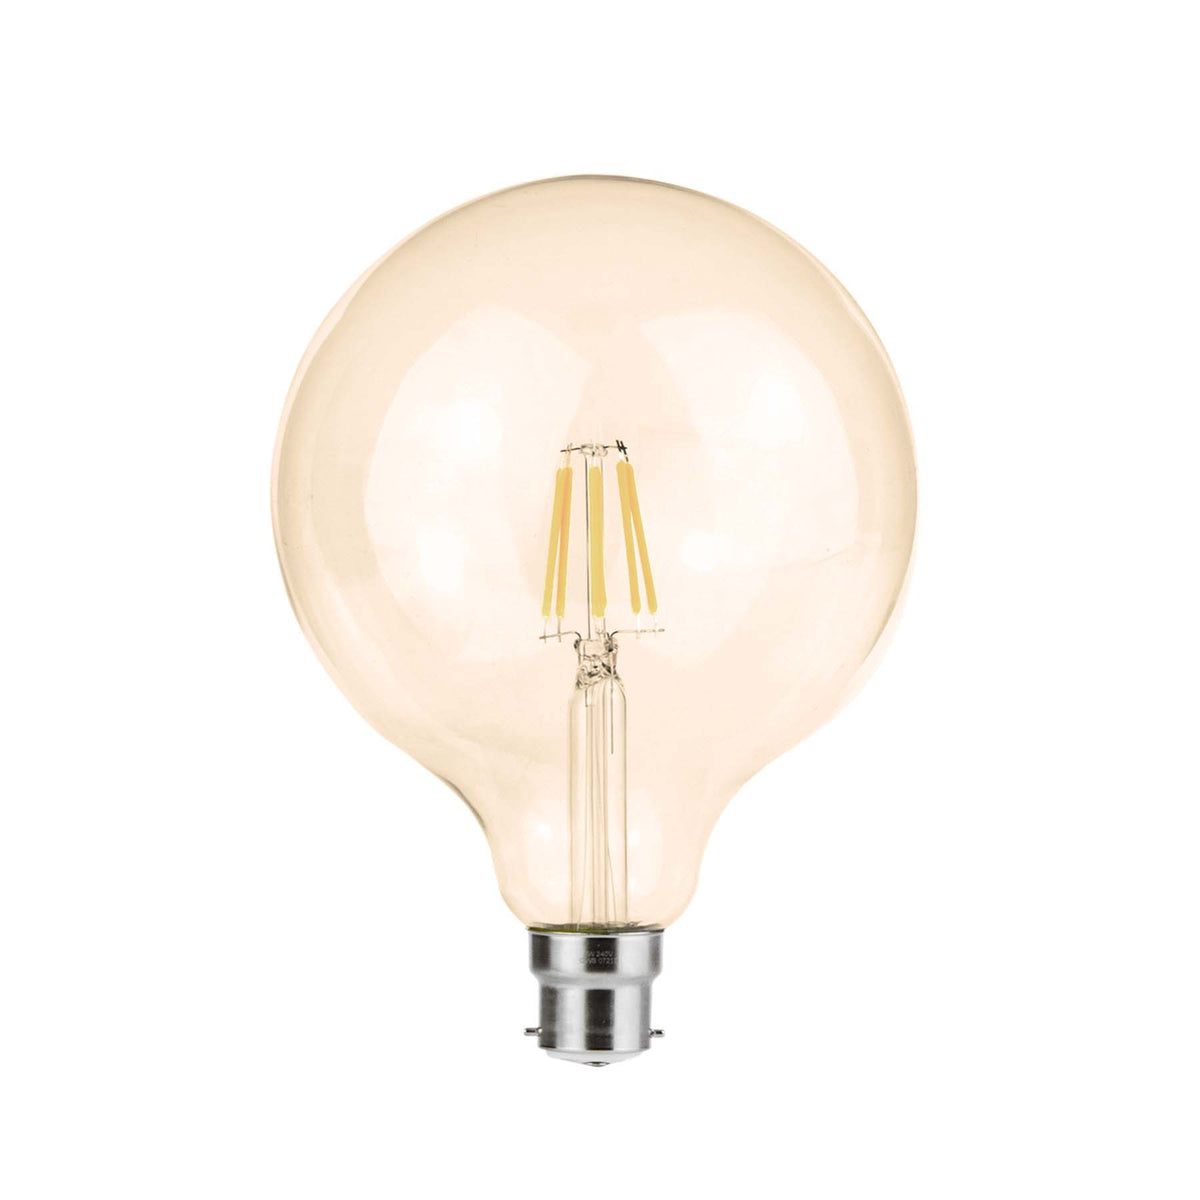 Fujibin LED Light Bulb 5W (Warm White) - B22